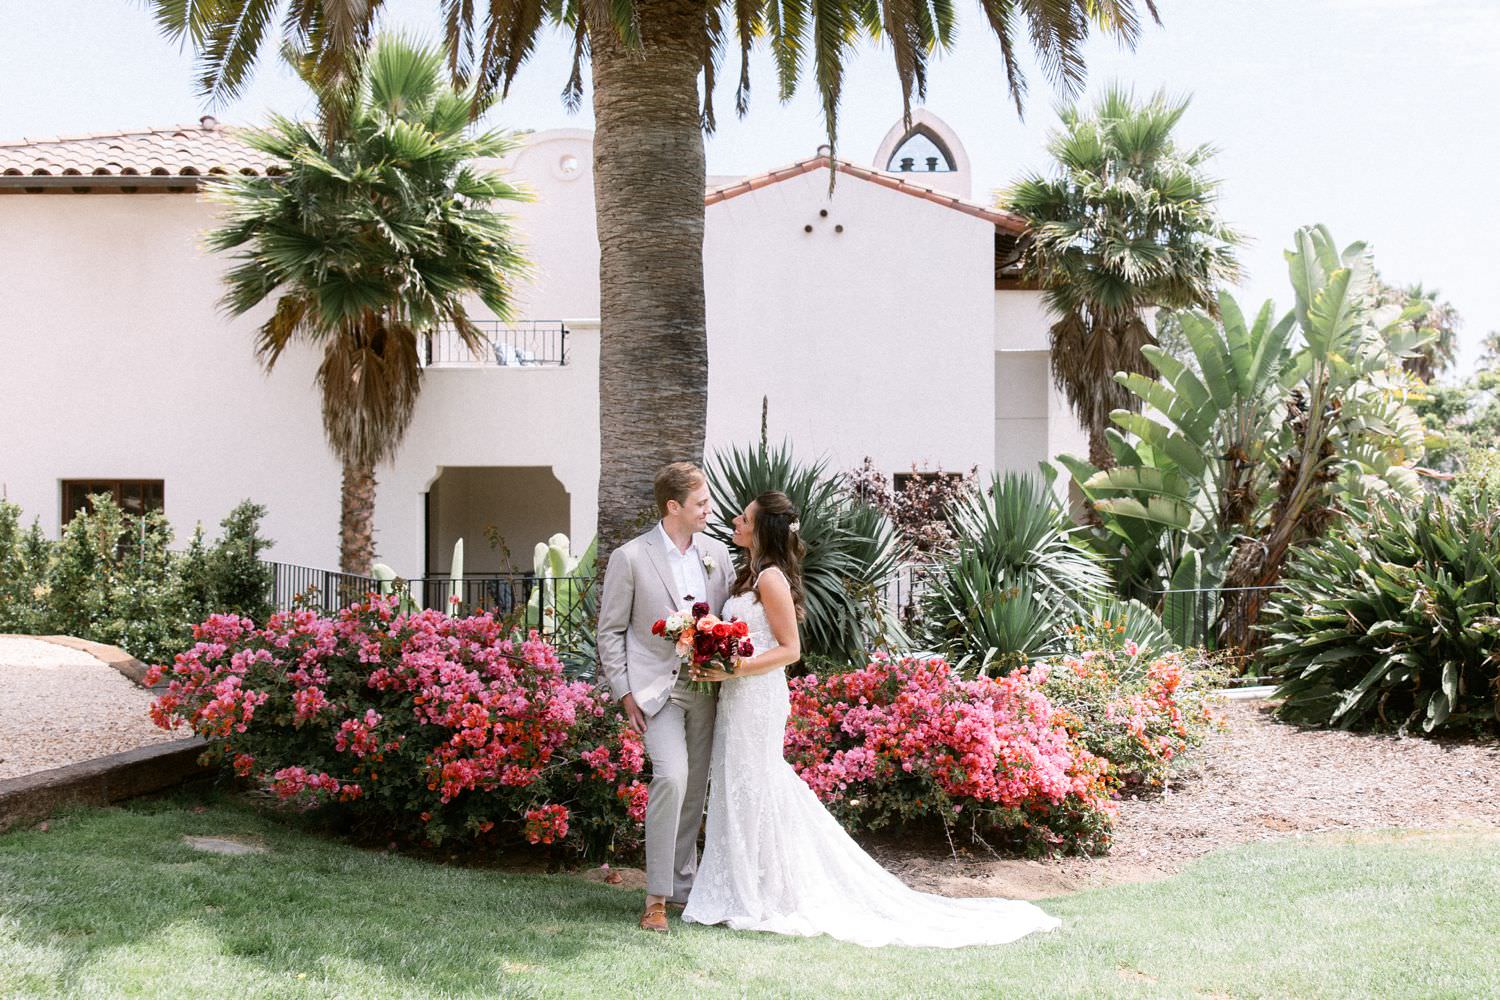 Santa Barbara hotel resort wedding